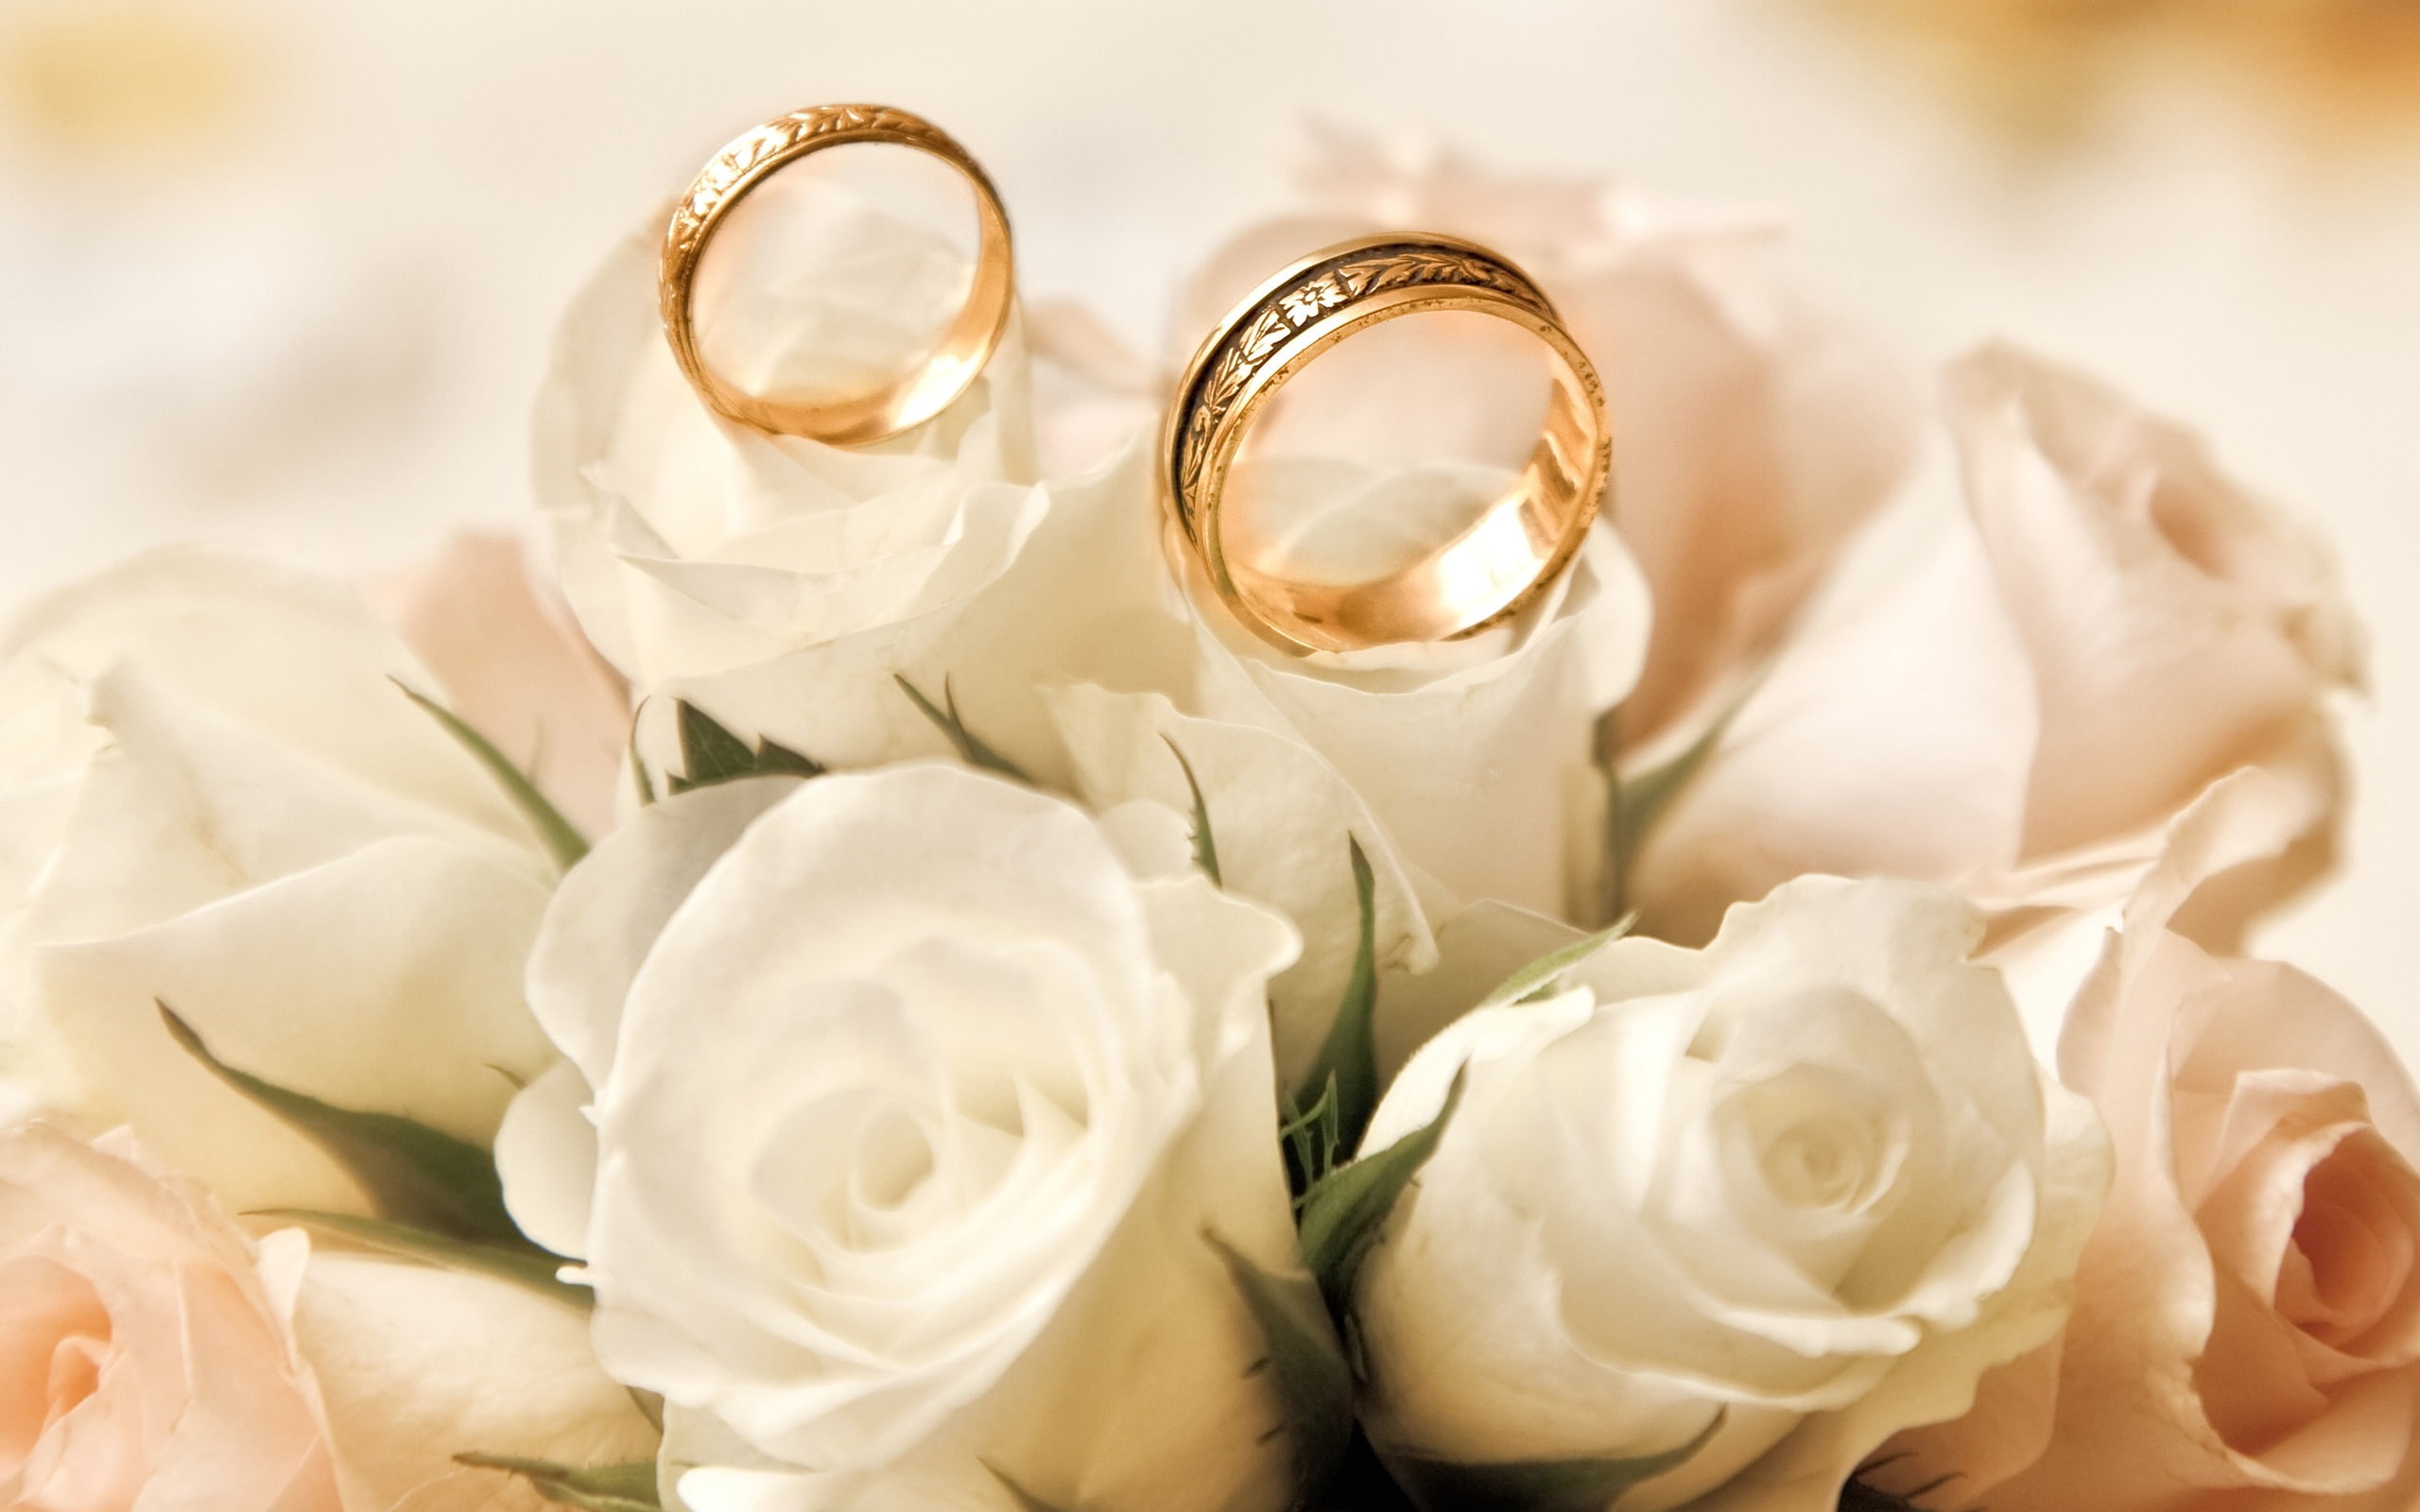 Engagement rings, roses, white flower buds, gold wedding band; white roses